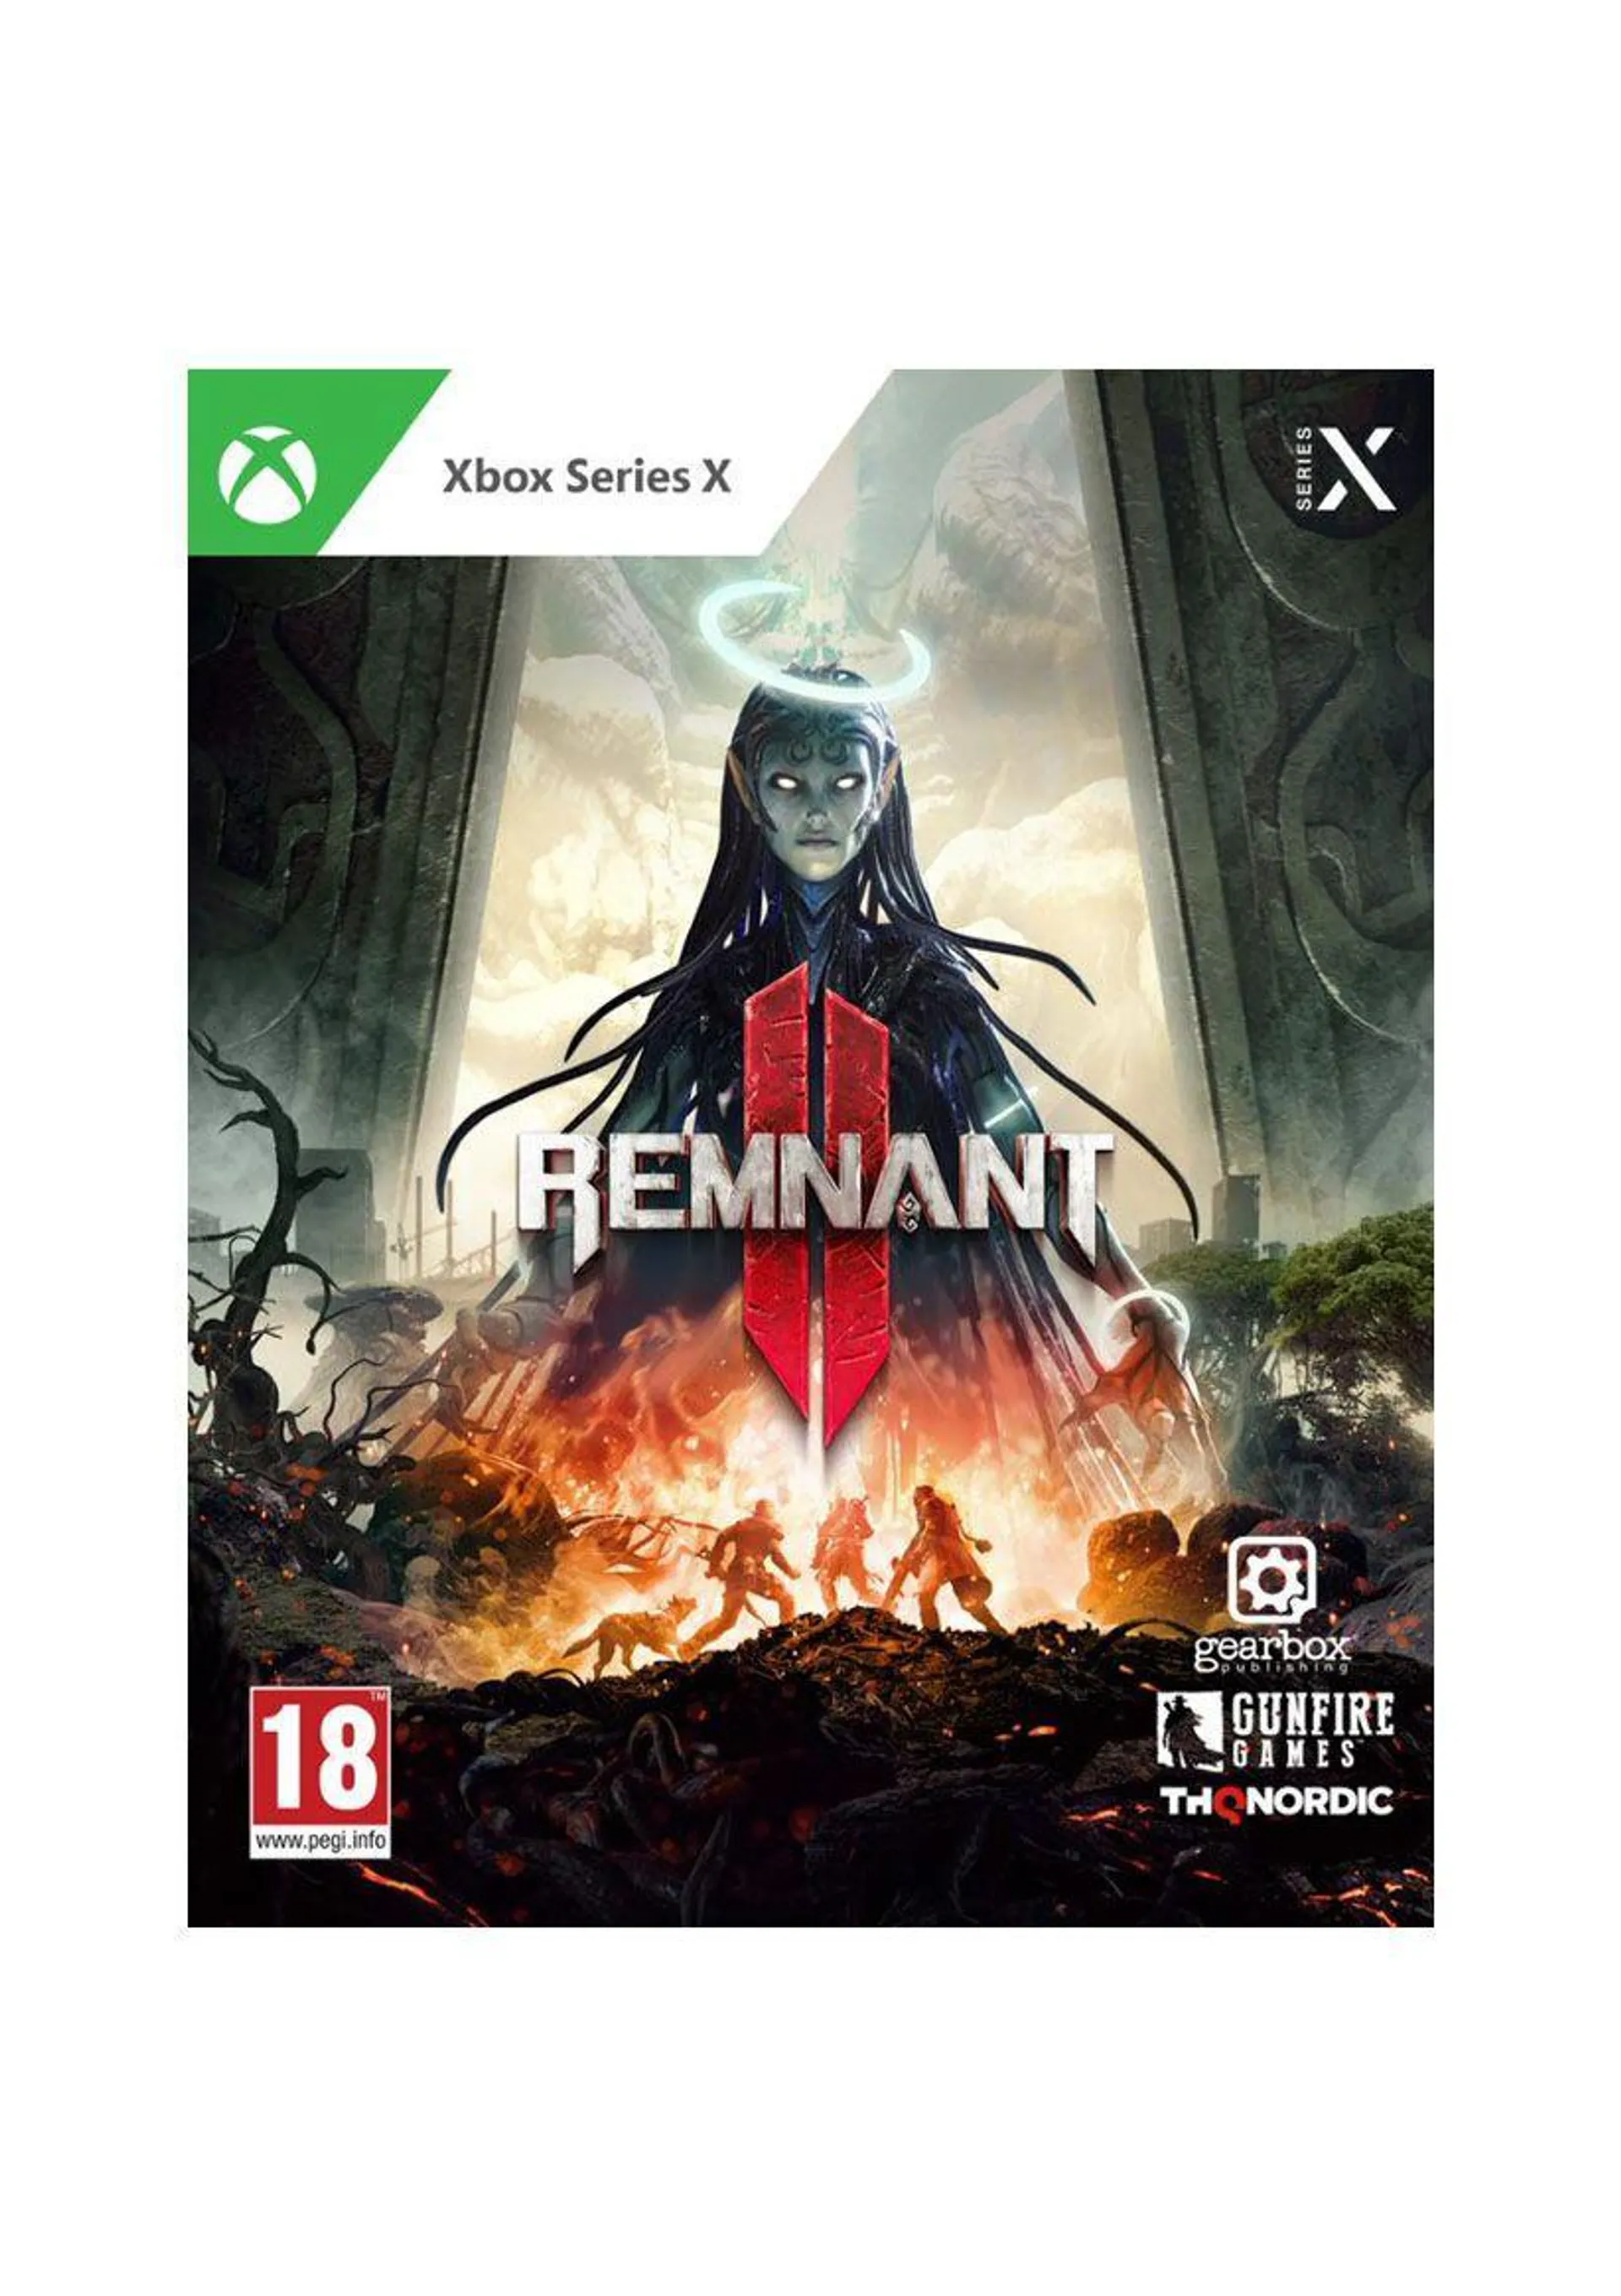 Remnant 2 (XBX) on Xbox Series X | S